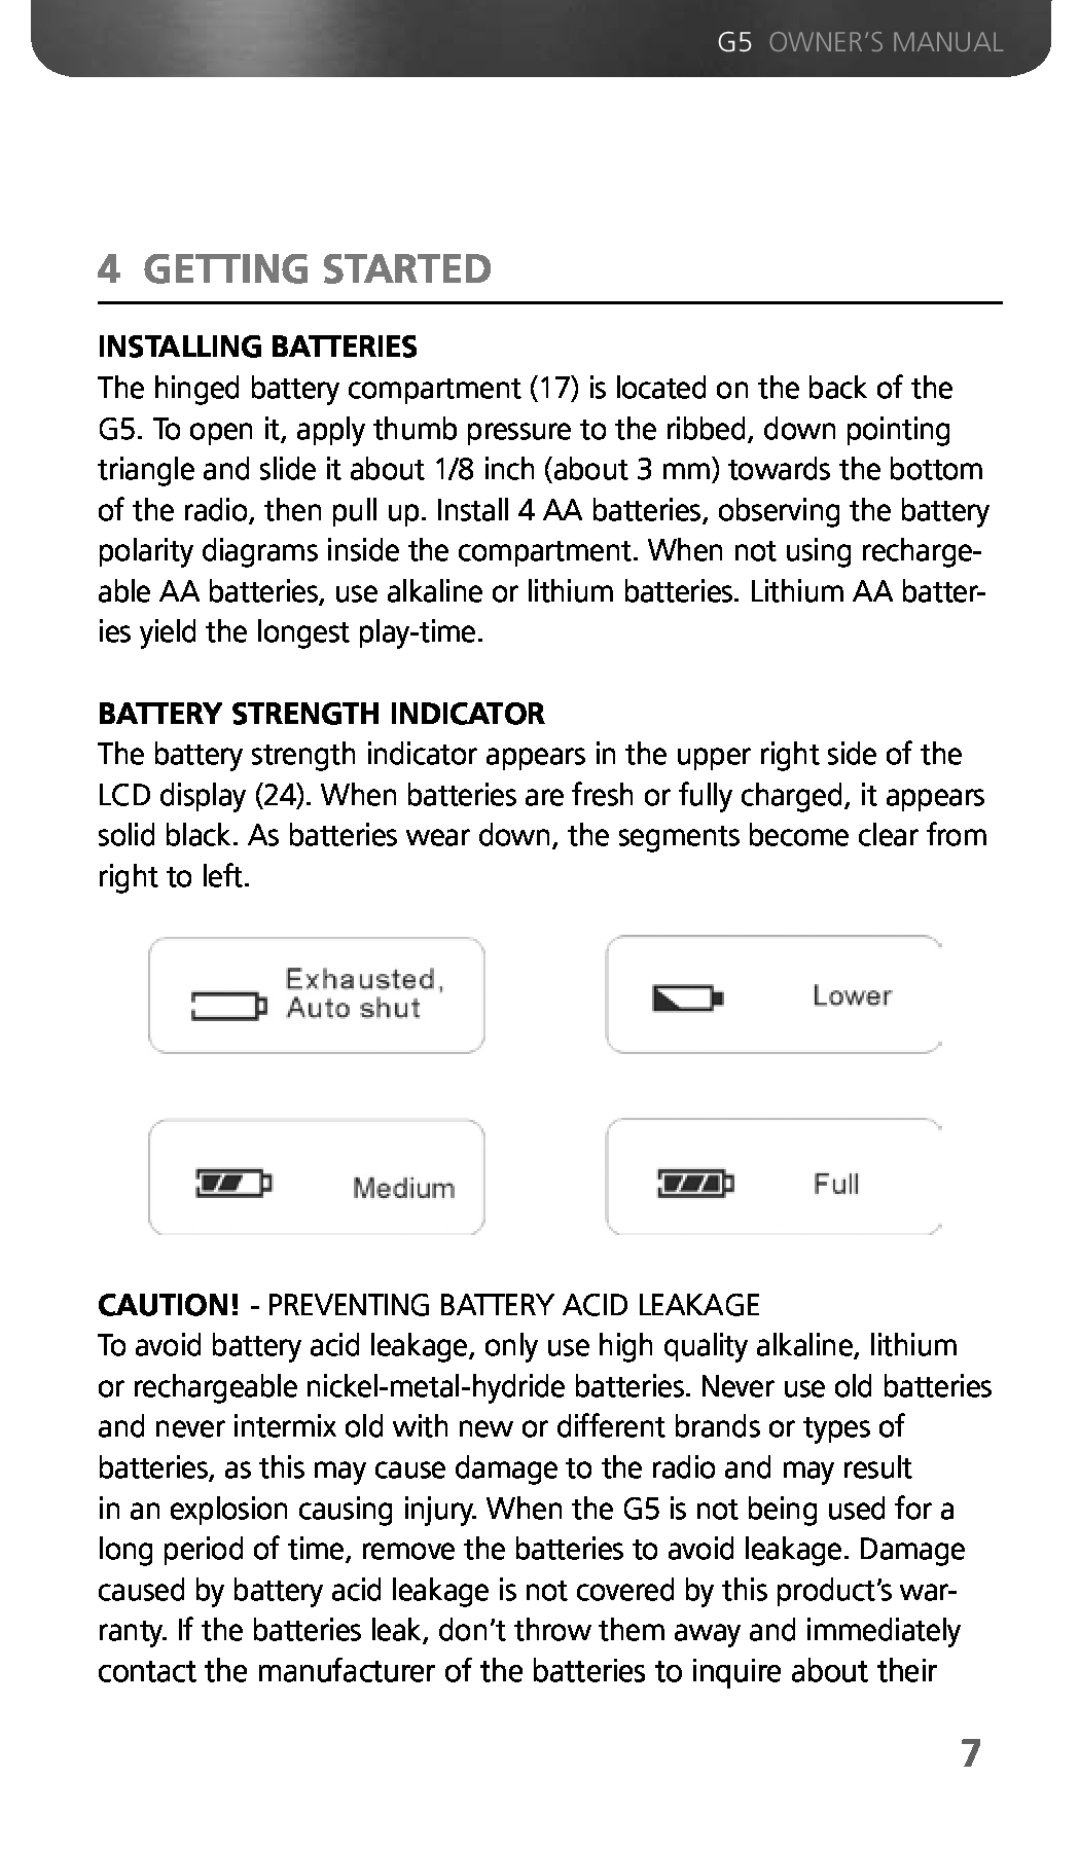 Eton G5 owner manual Getting Started, Installing Batteries, Battery Strength Indicator 